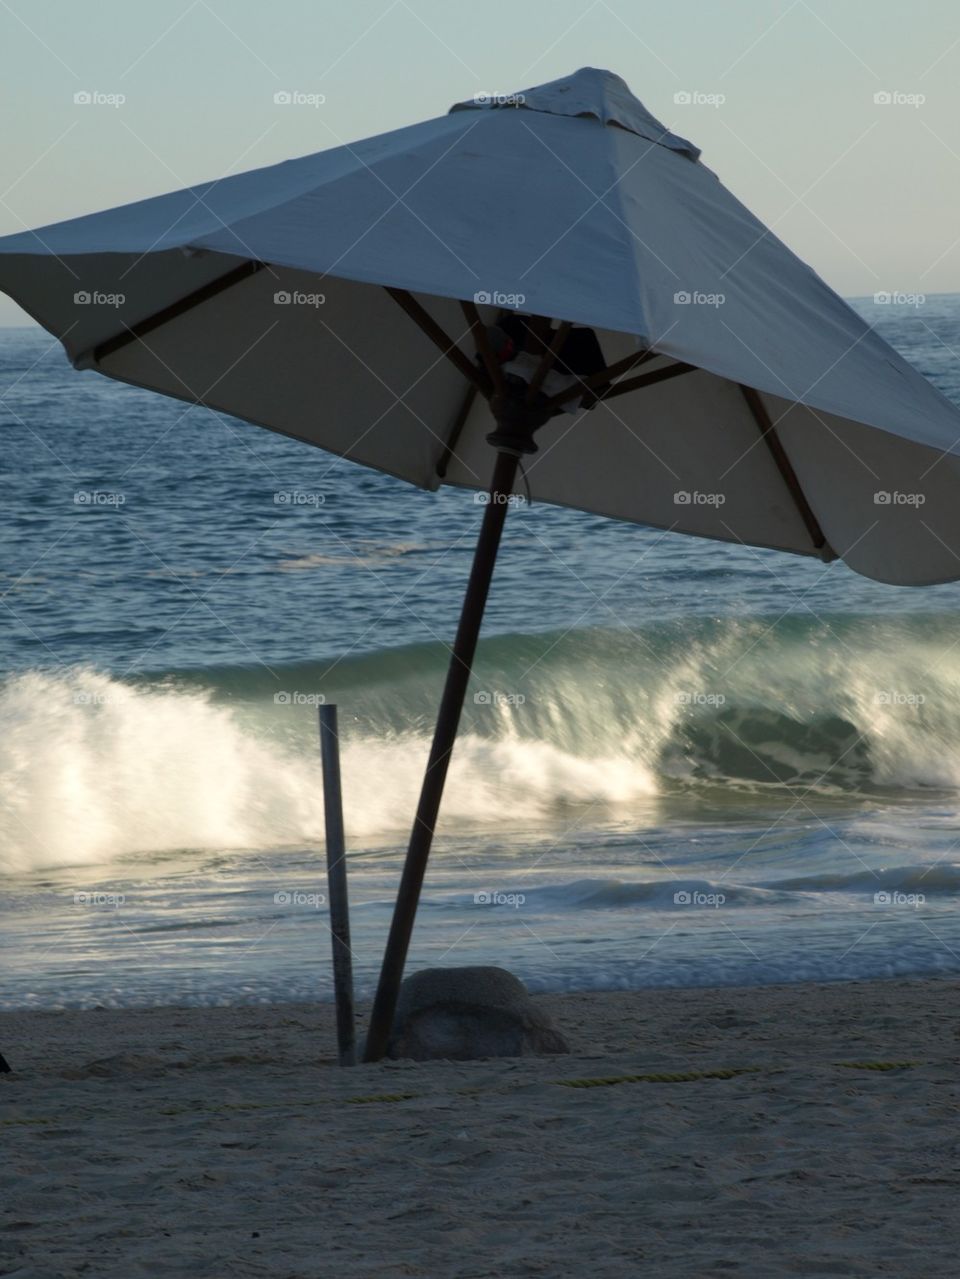 Umbrella on the Beach!